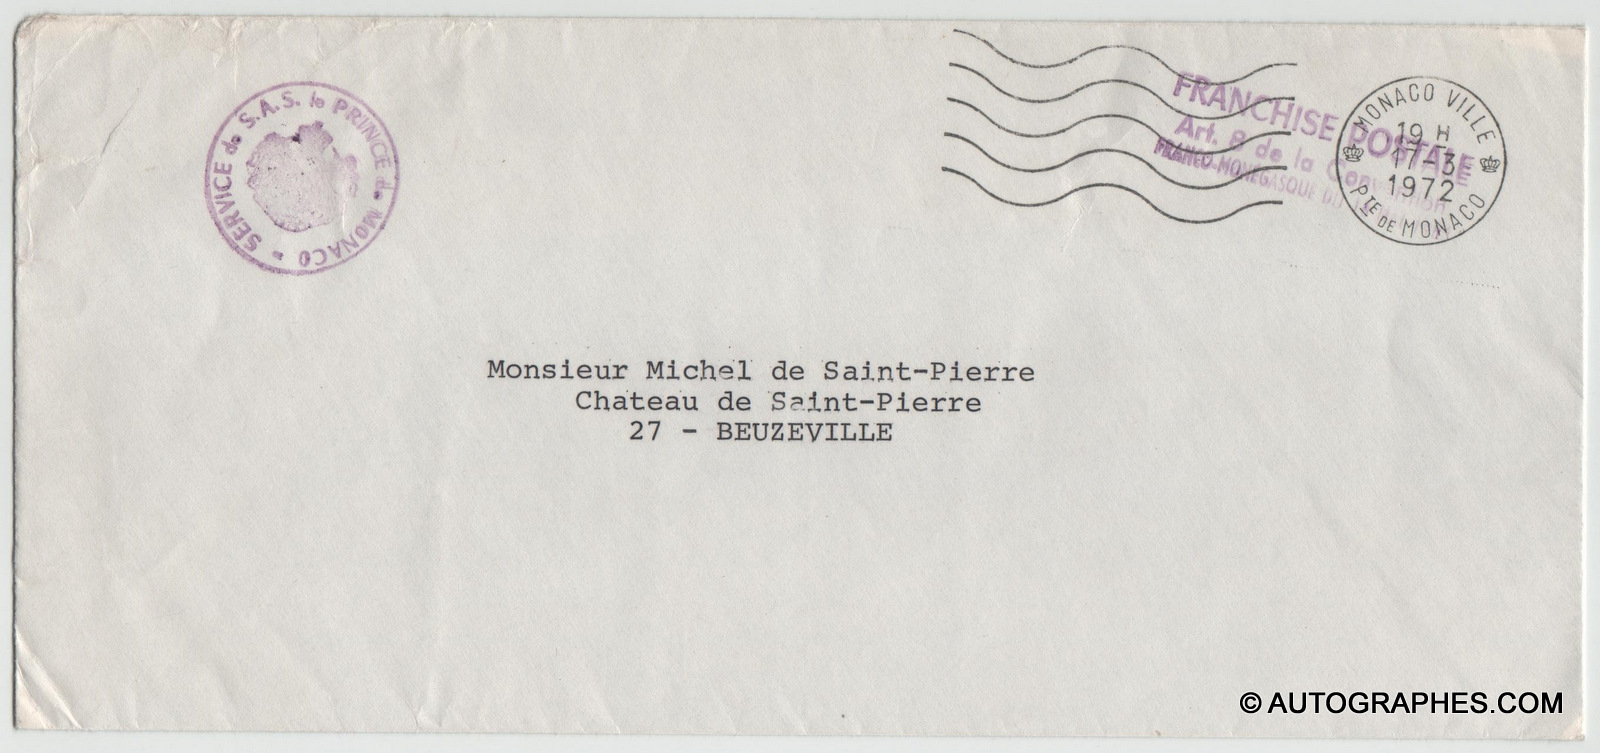 enveloppe-dactylographiee-princesse-grace-de-monaco-1972-1